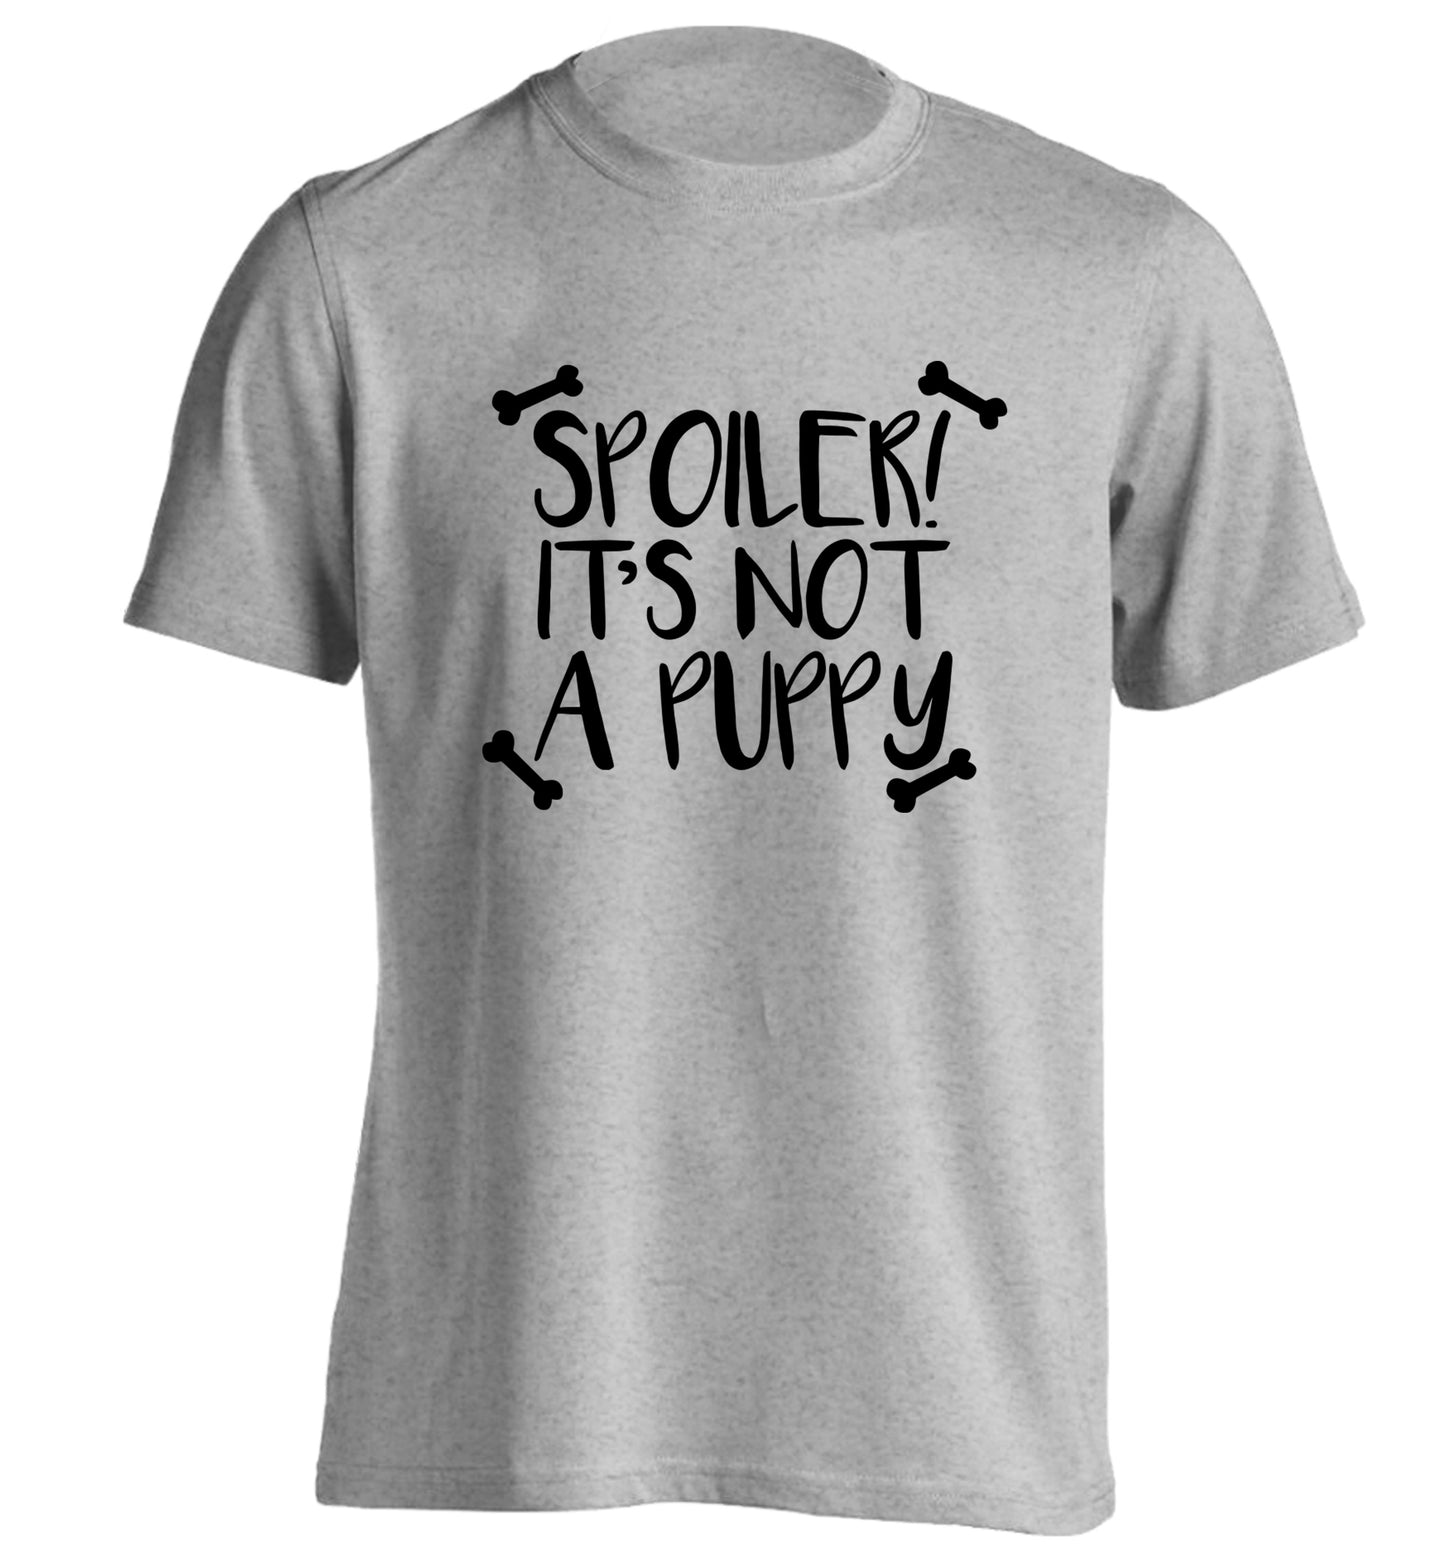 Spoiler it's not a puppy adults unisex grey Tshirt 2XL